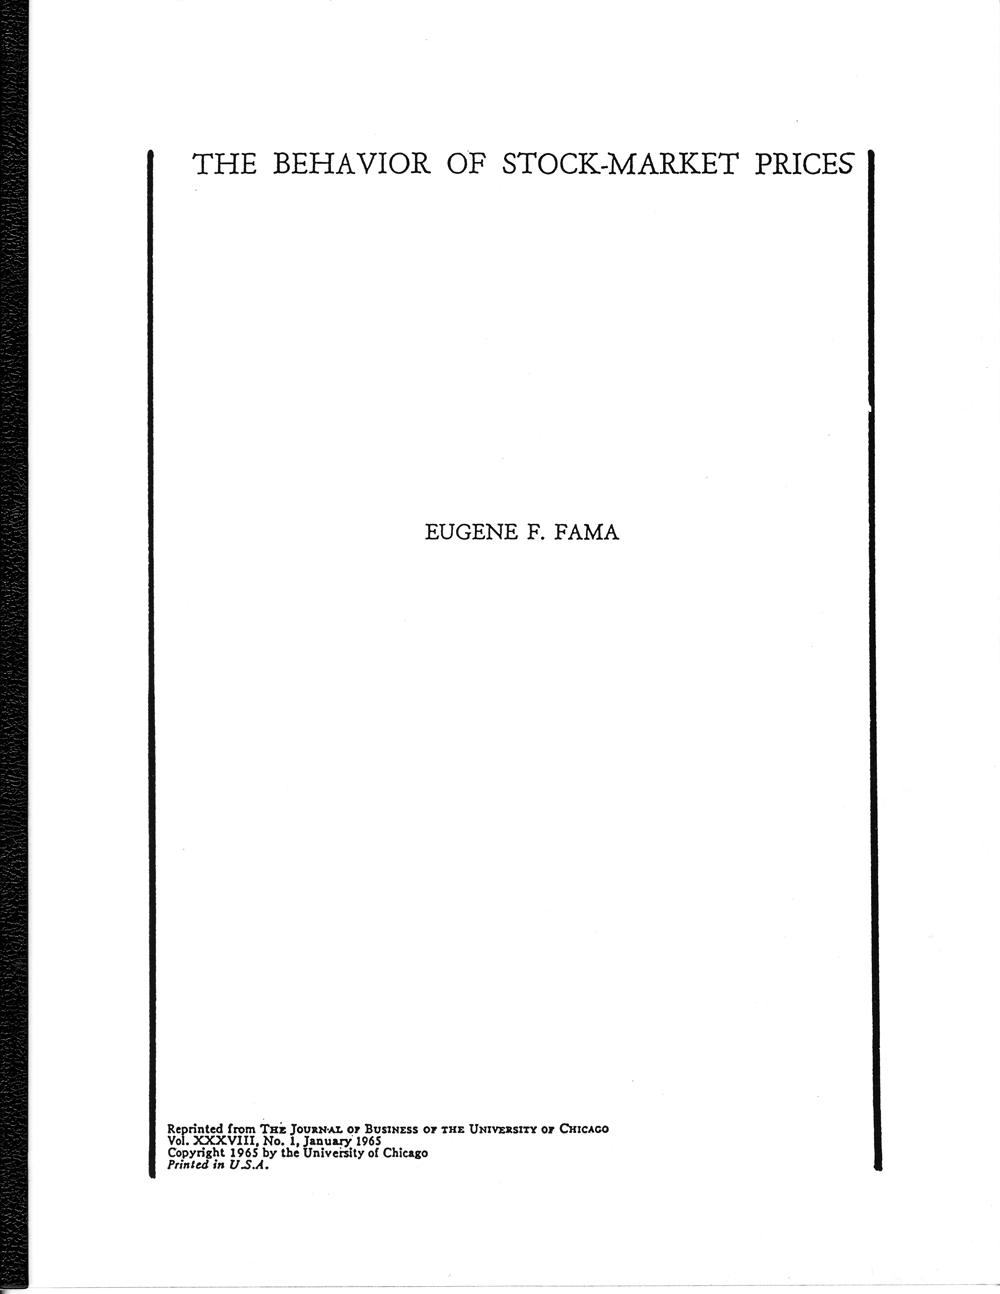 the behavior of stock-market prices fama 1965